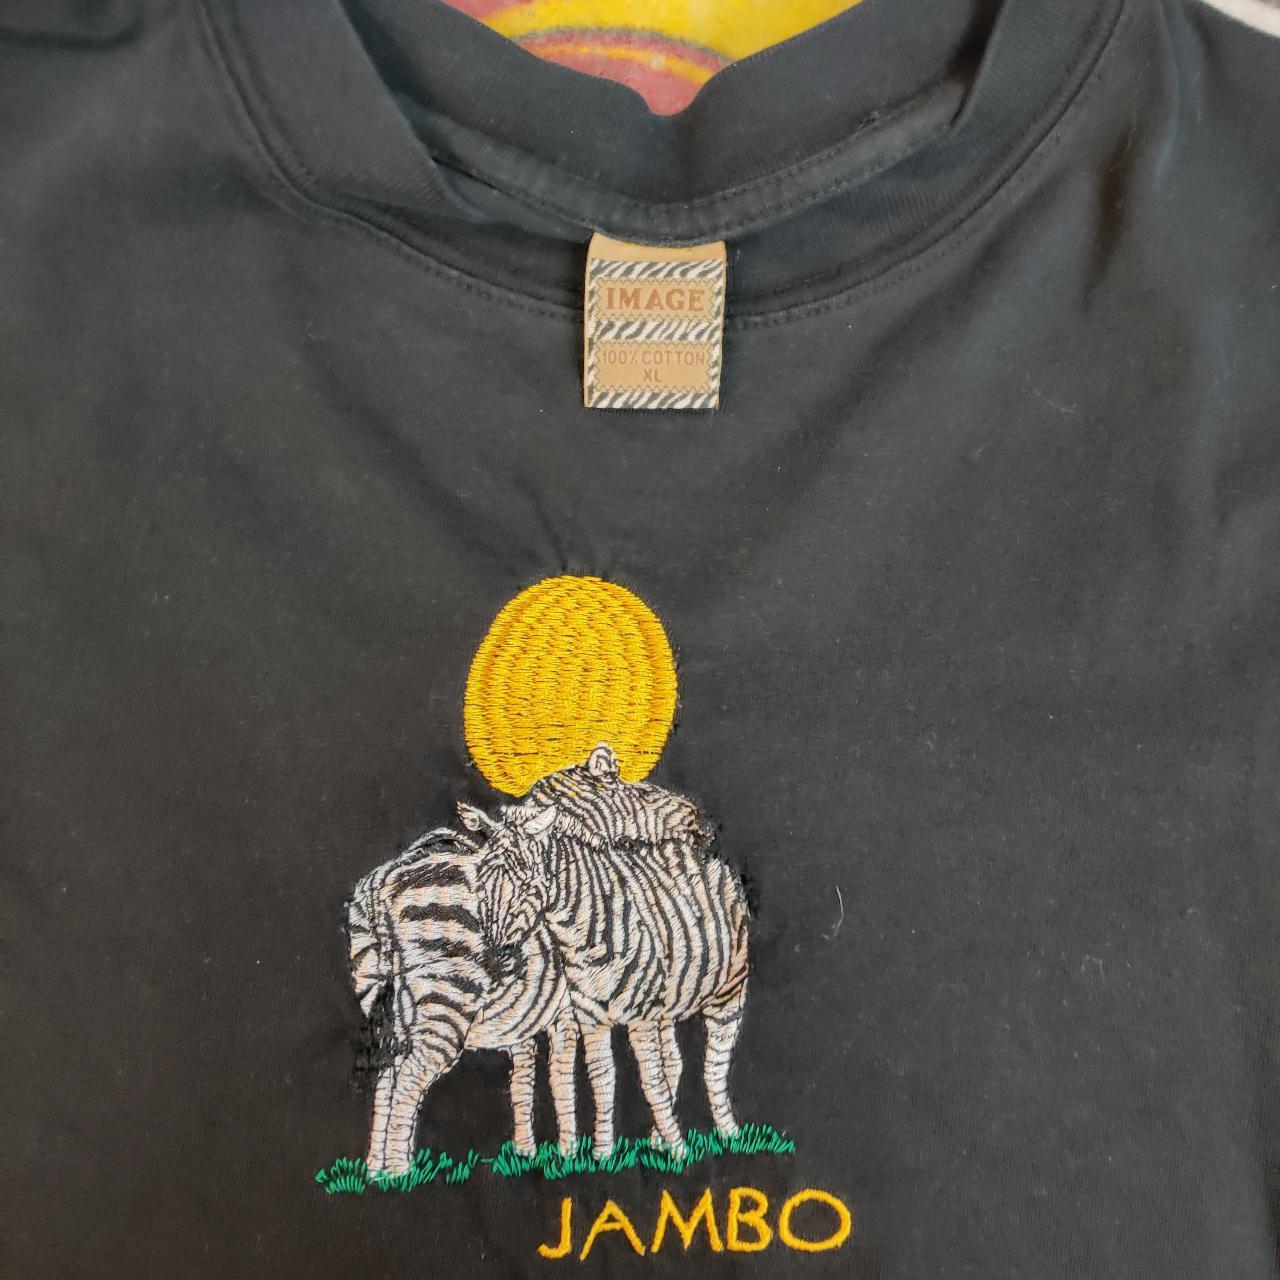 Product Image 2 - Vintage Embroidered Jambo Zebra T-Shirt
used